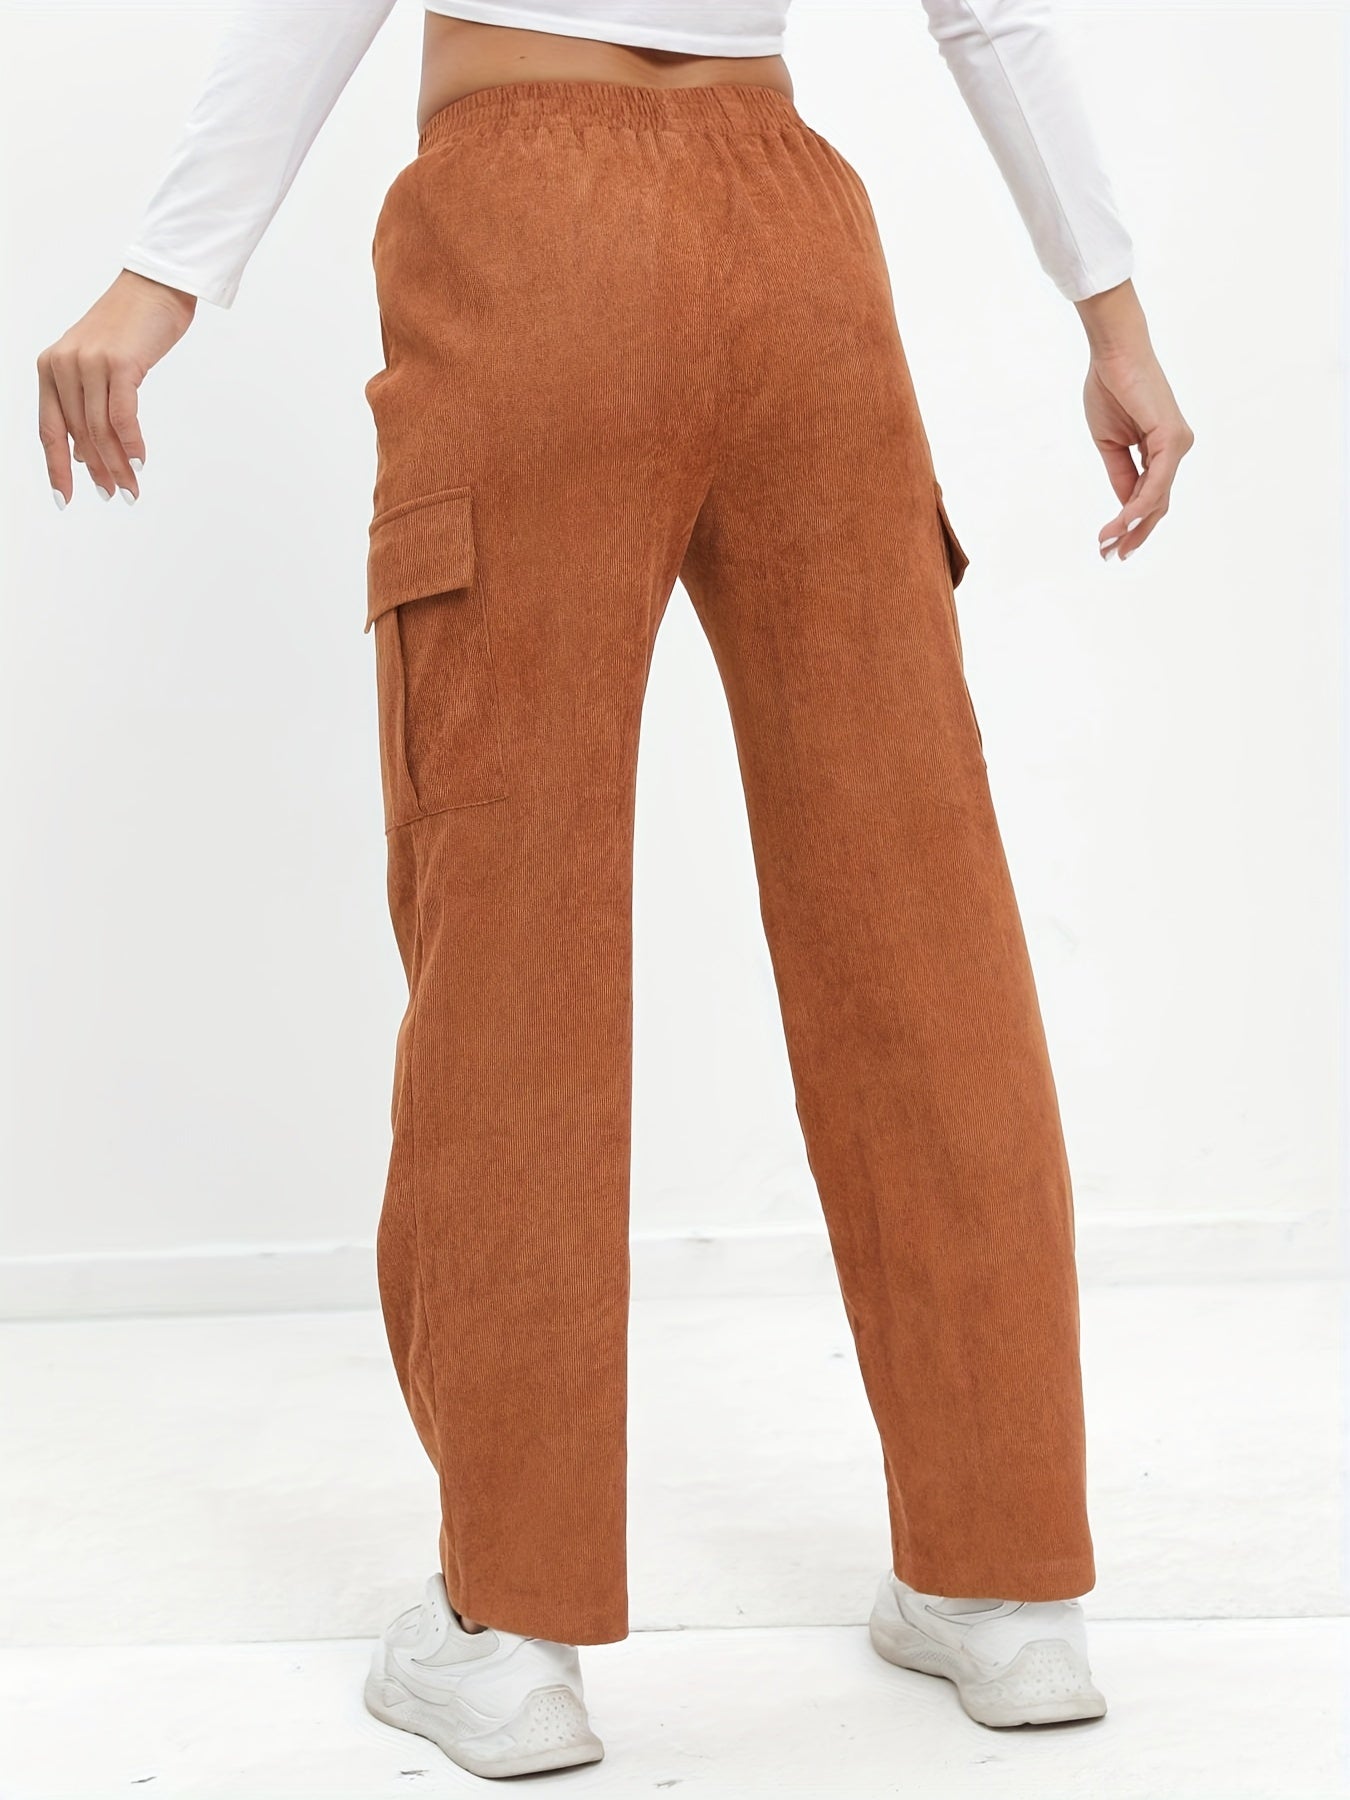 vlovelaw  Solid Pocket Straight Leg Pants, Casual Elastic Waist Pants, Women's Clothing